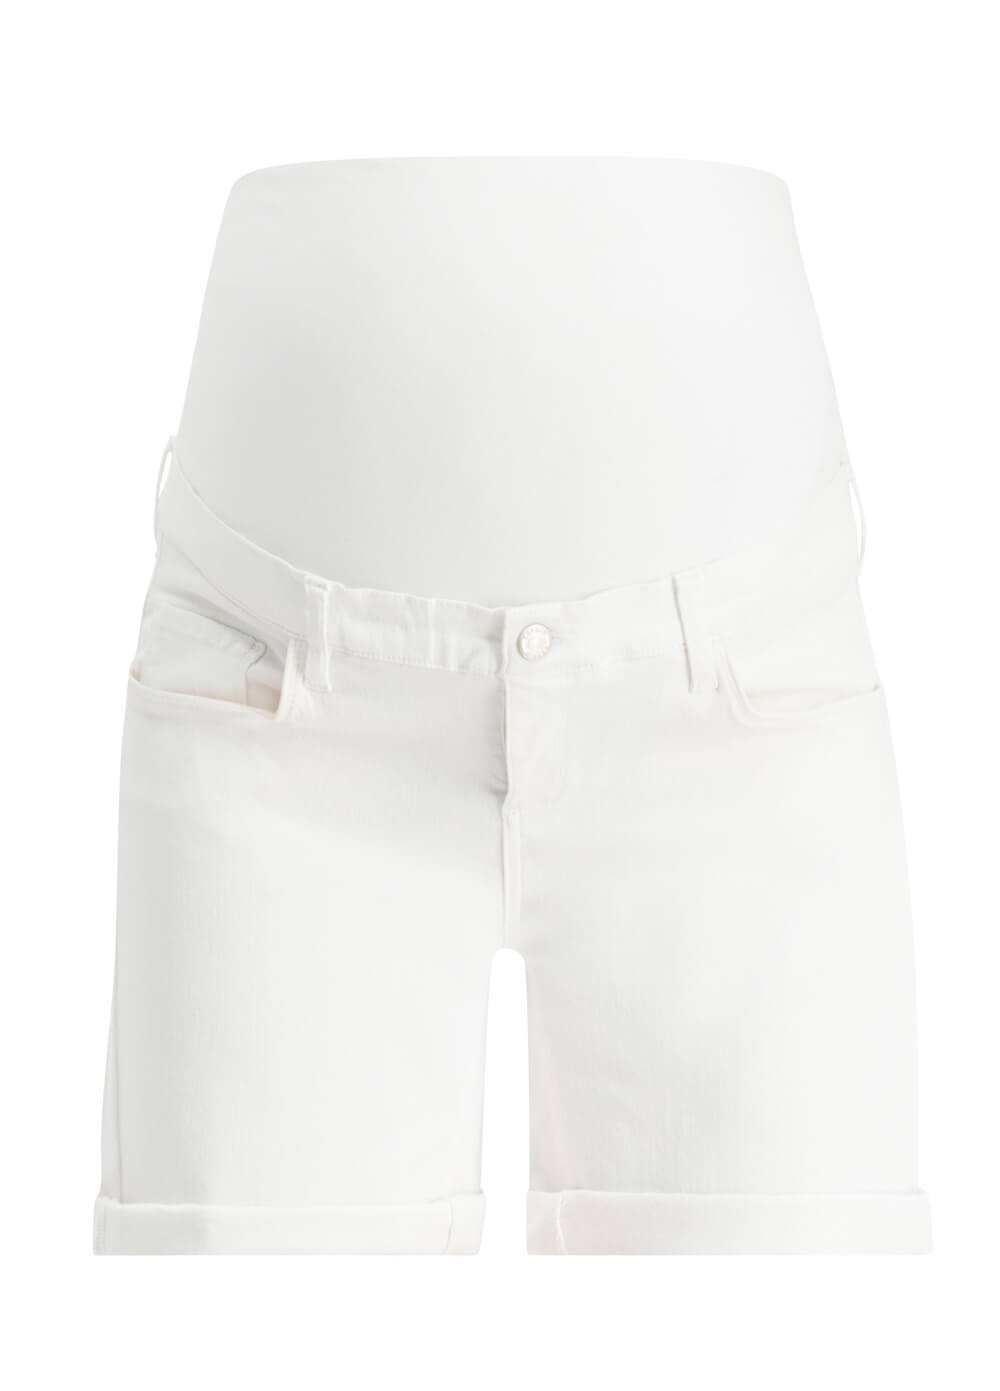 Esprit - White Denim Over Bump Maternity Shorts | Queen Bee